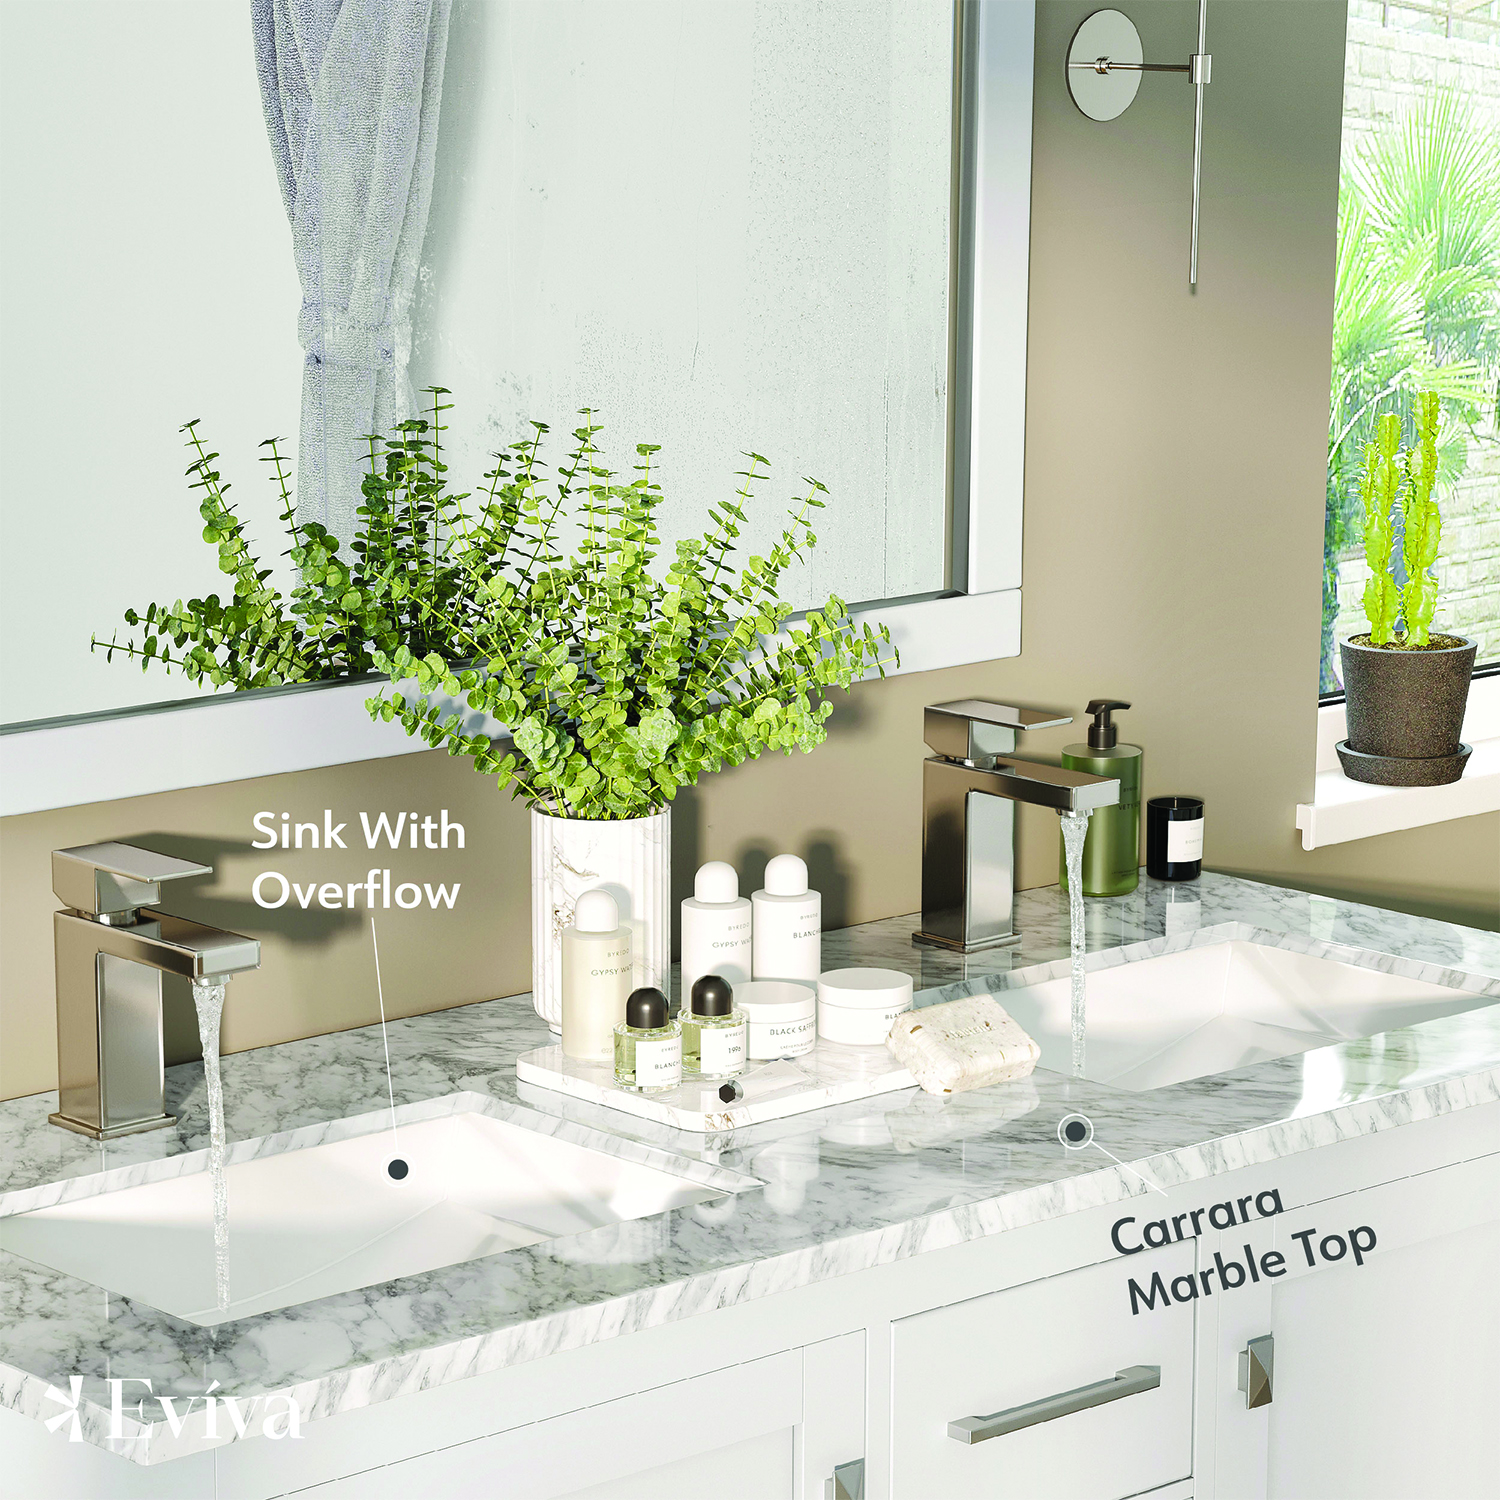 How to Decorate Bathroom Counter - 18 Decor Ideas